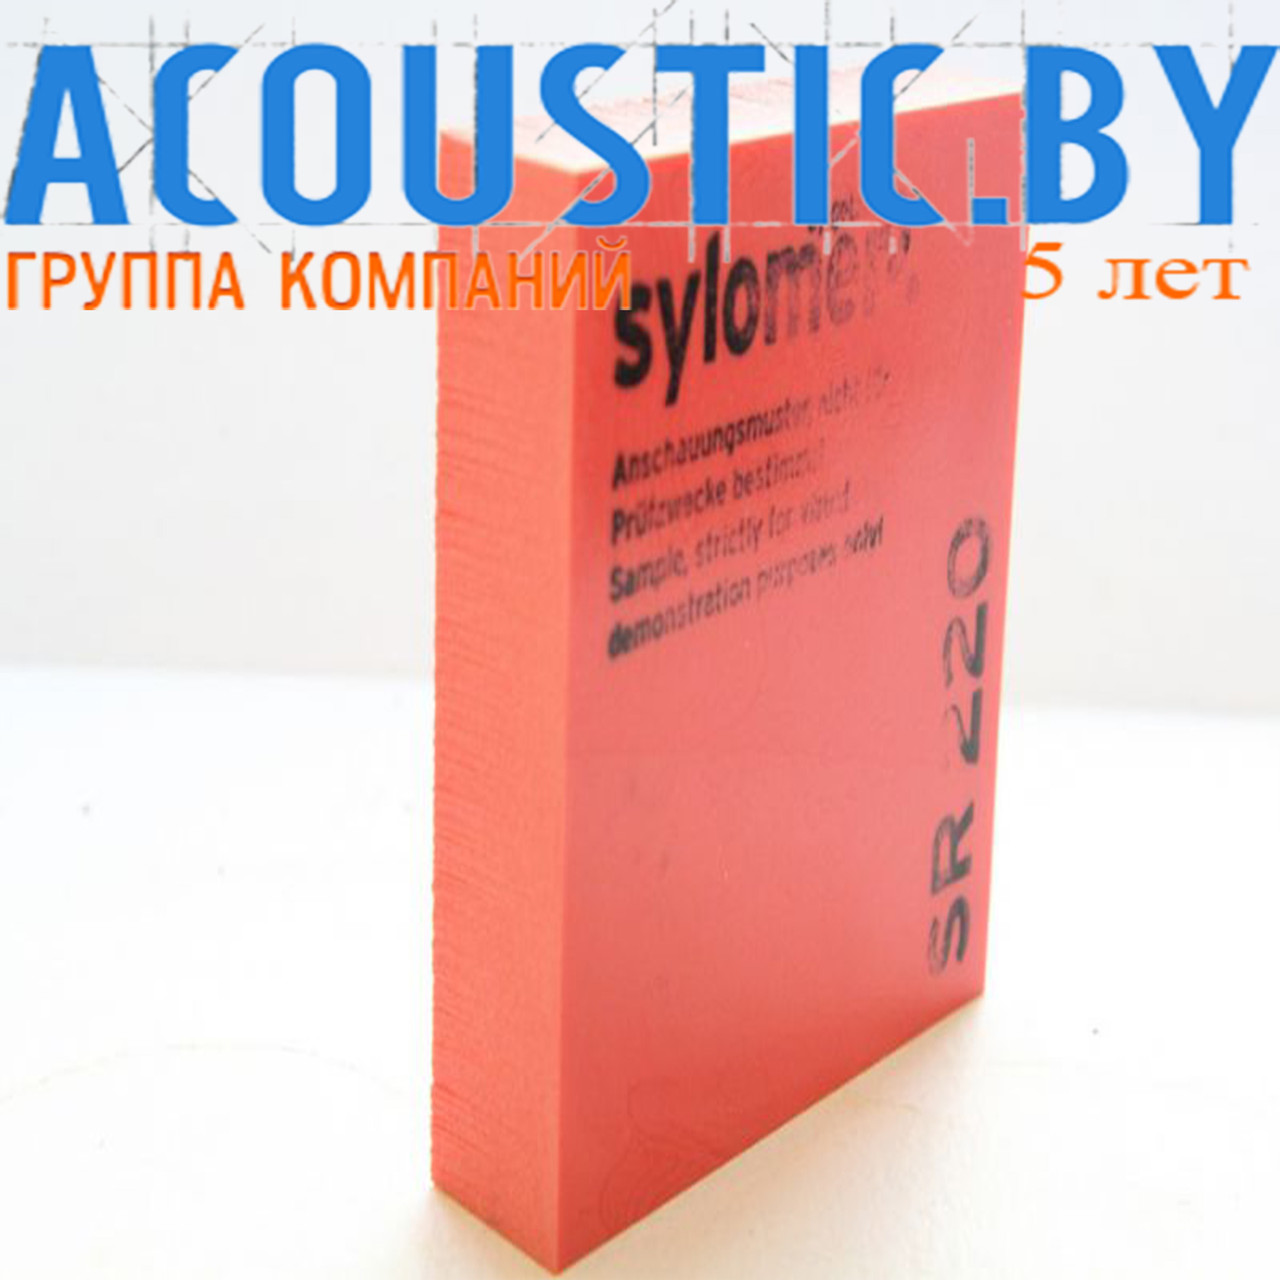 Эластомер виброизолирующий Sylomer SR 220, 12,5 мм.  Звукоизоляция, шумоизоляция, виброизоляция.